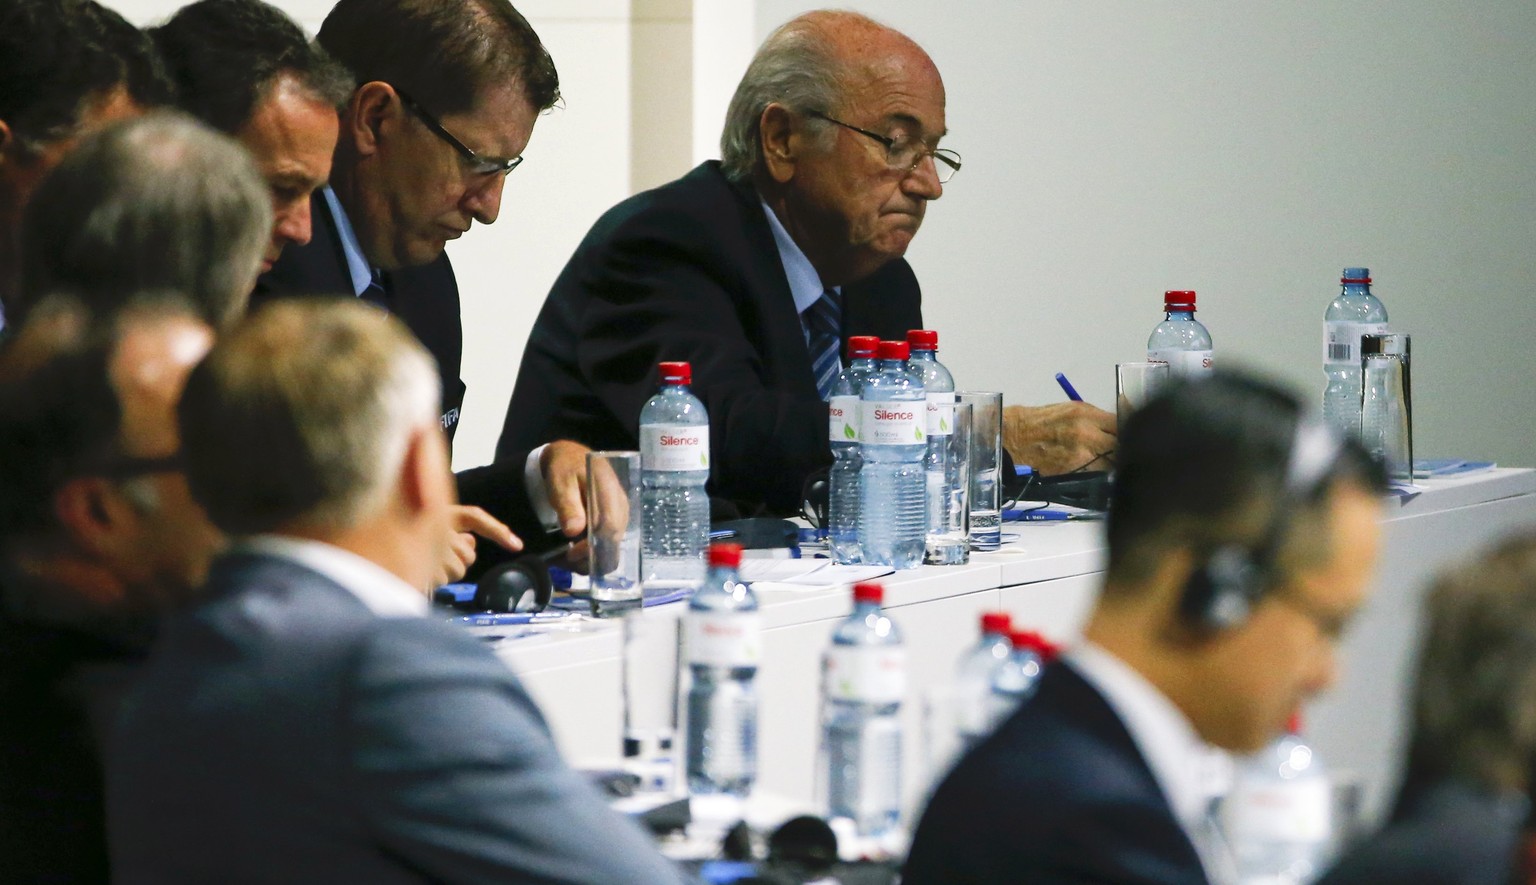 Ob Sepp Blatter bereits an seiner ersten Kolumne arbeitet?